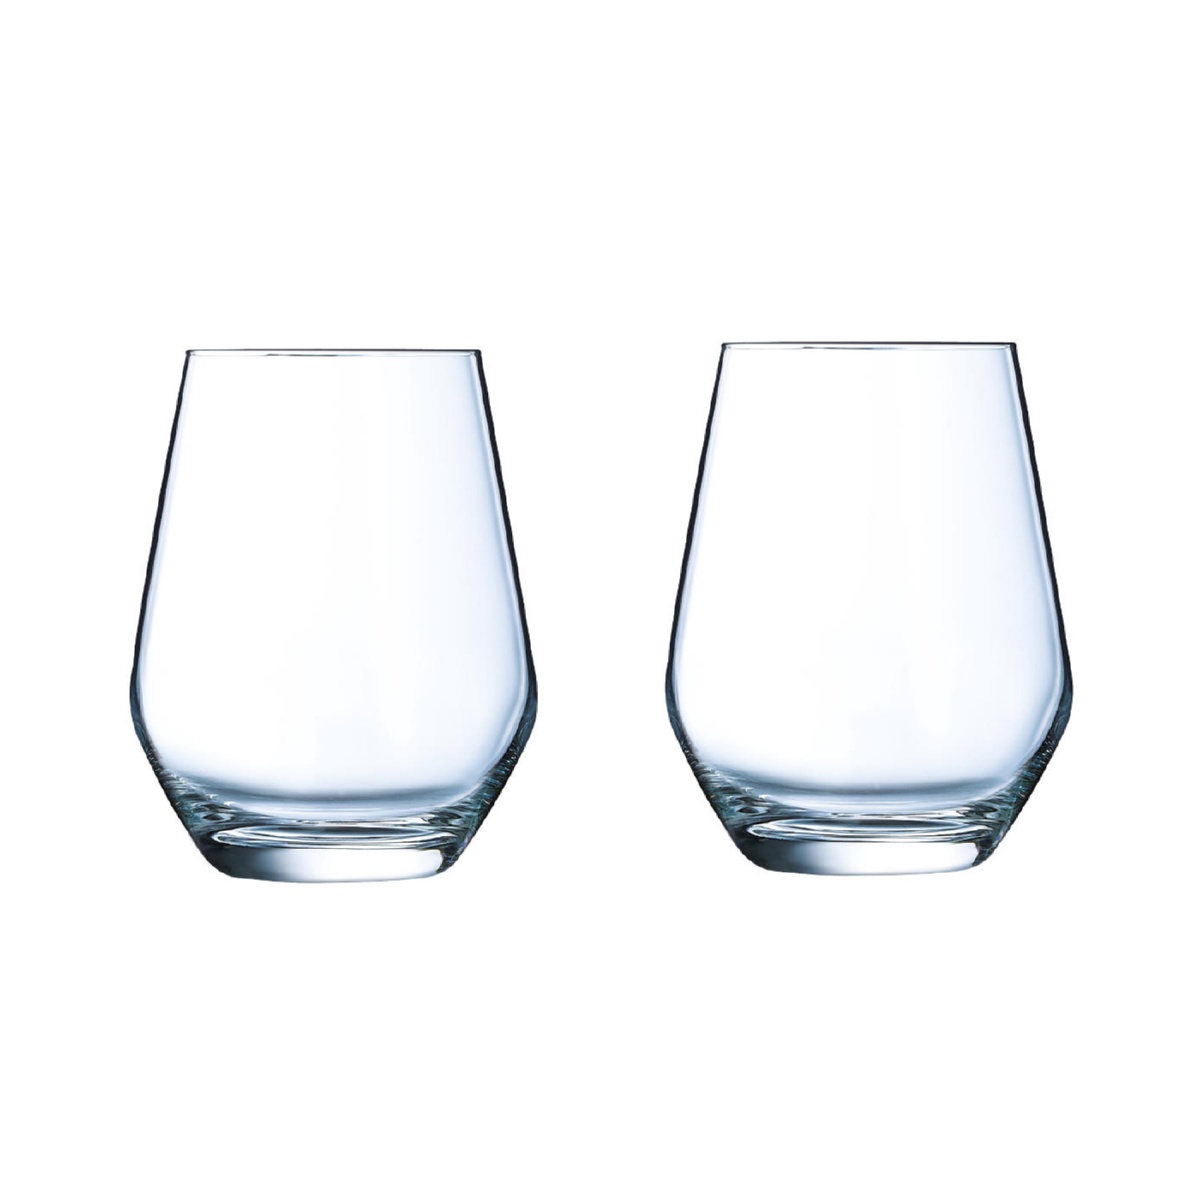 Набор стаканов Gipfel Vina Juliette 51131 2 предмета набор стаканов gipfel corse 42214 2 предмета